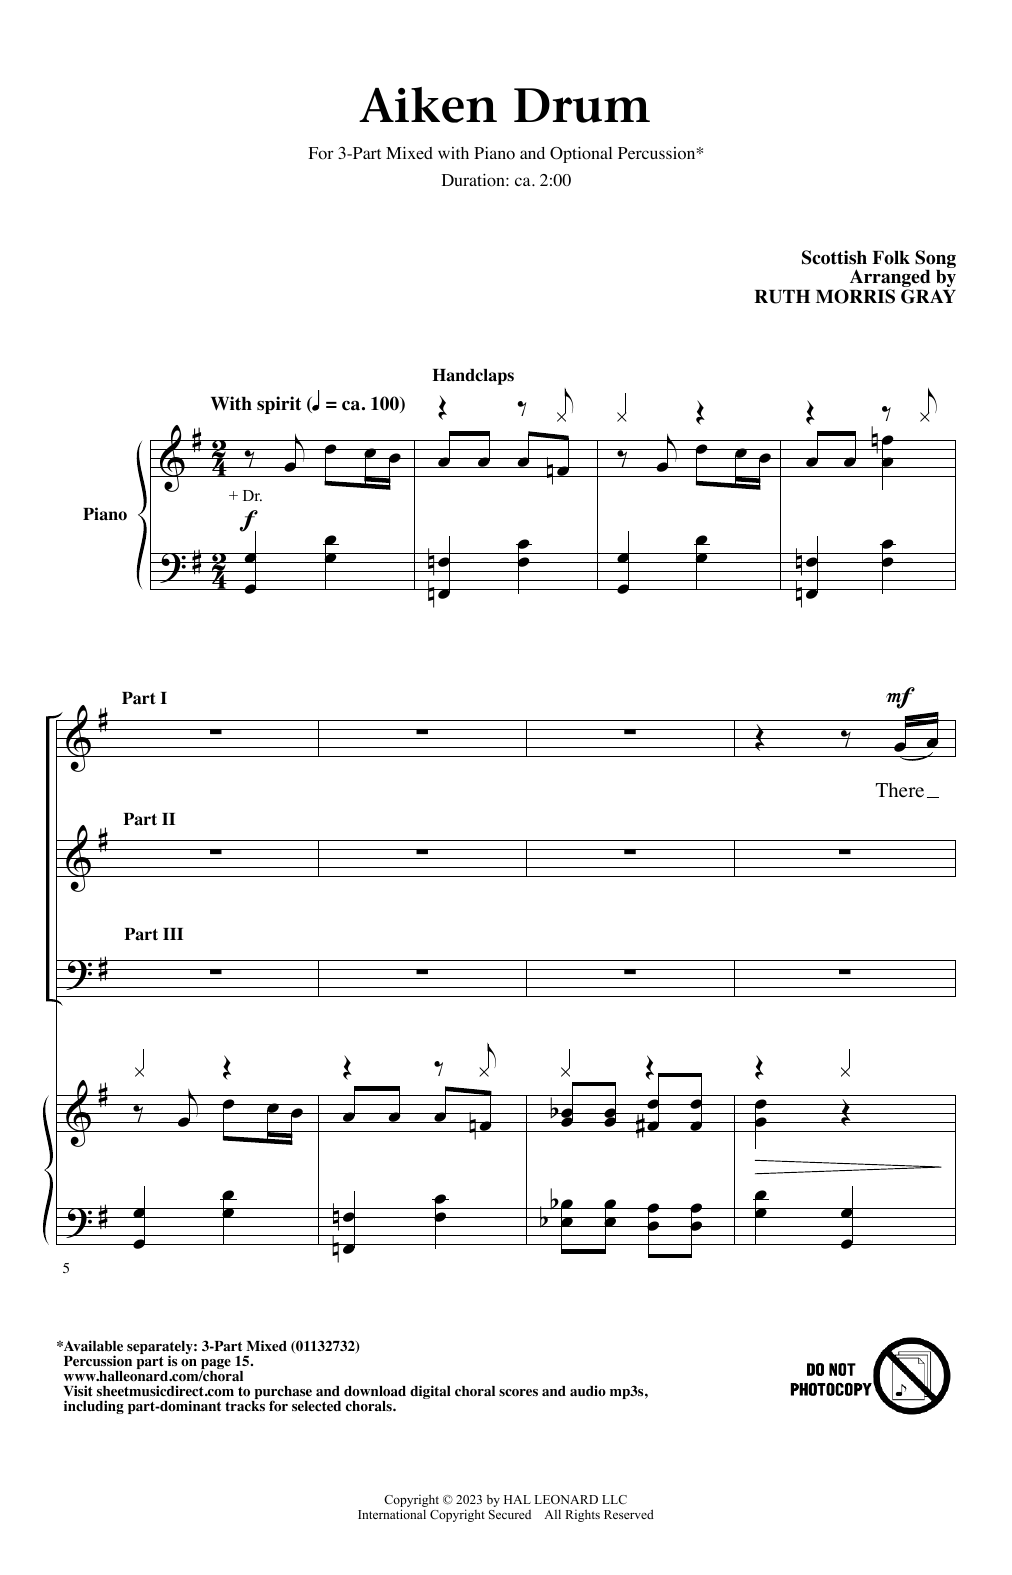 Scottish Folk Song Aiken Drum (arr. Ruth Morris Gray) sheet music notes and chords arranged for 3-Part Mixed Choir